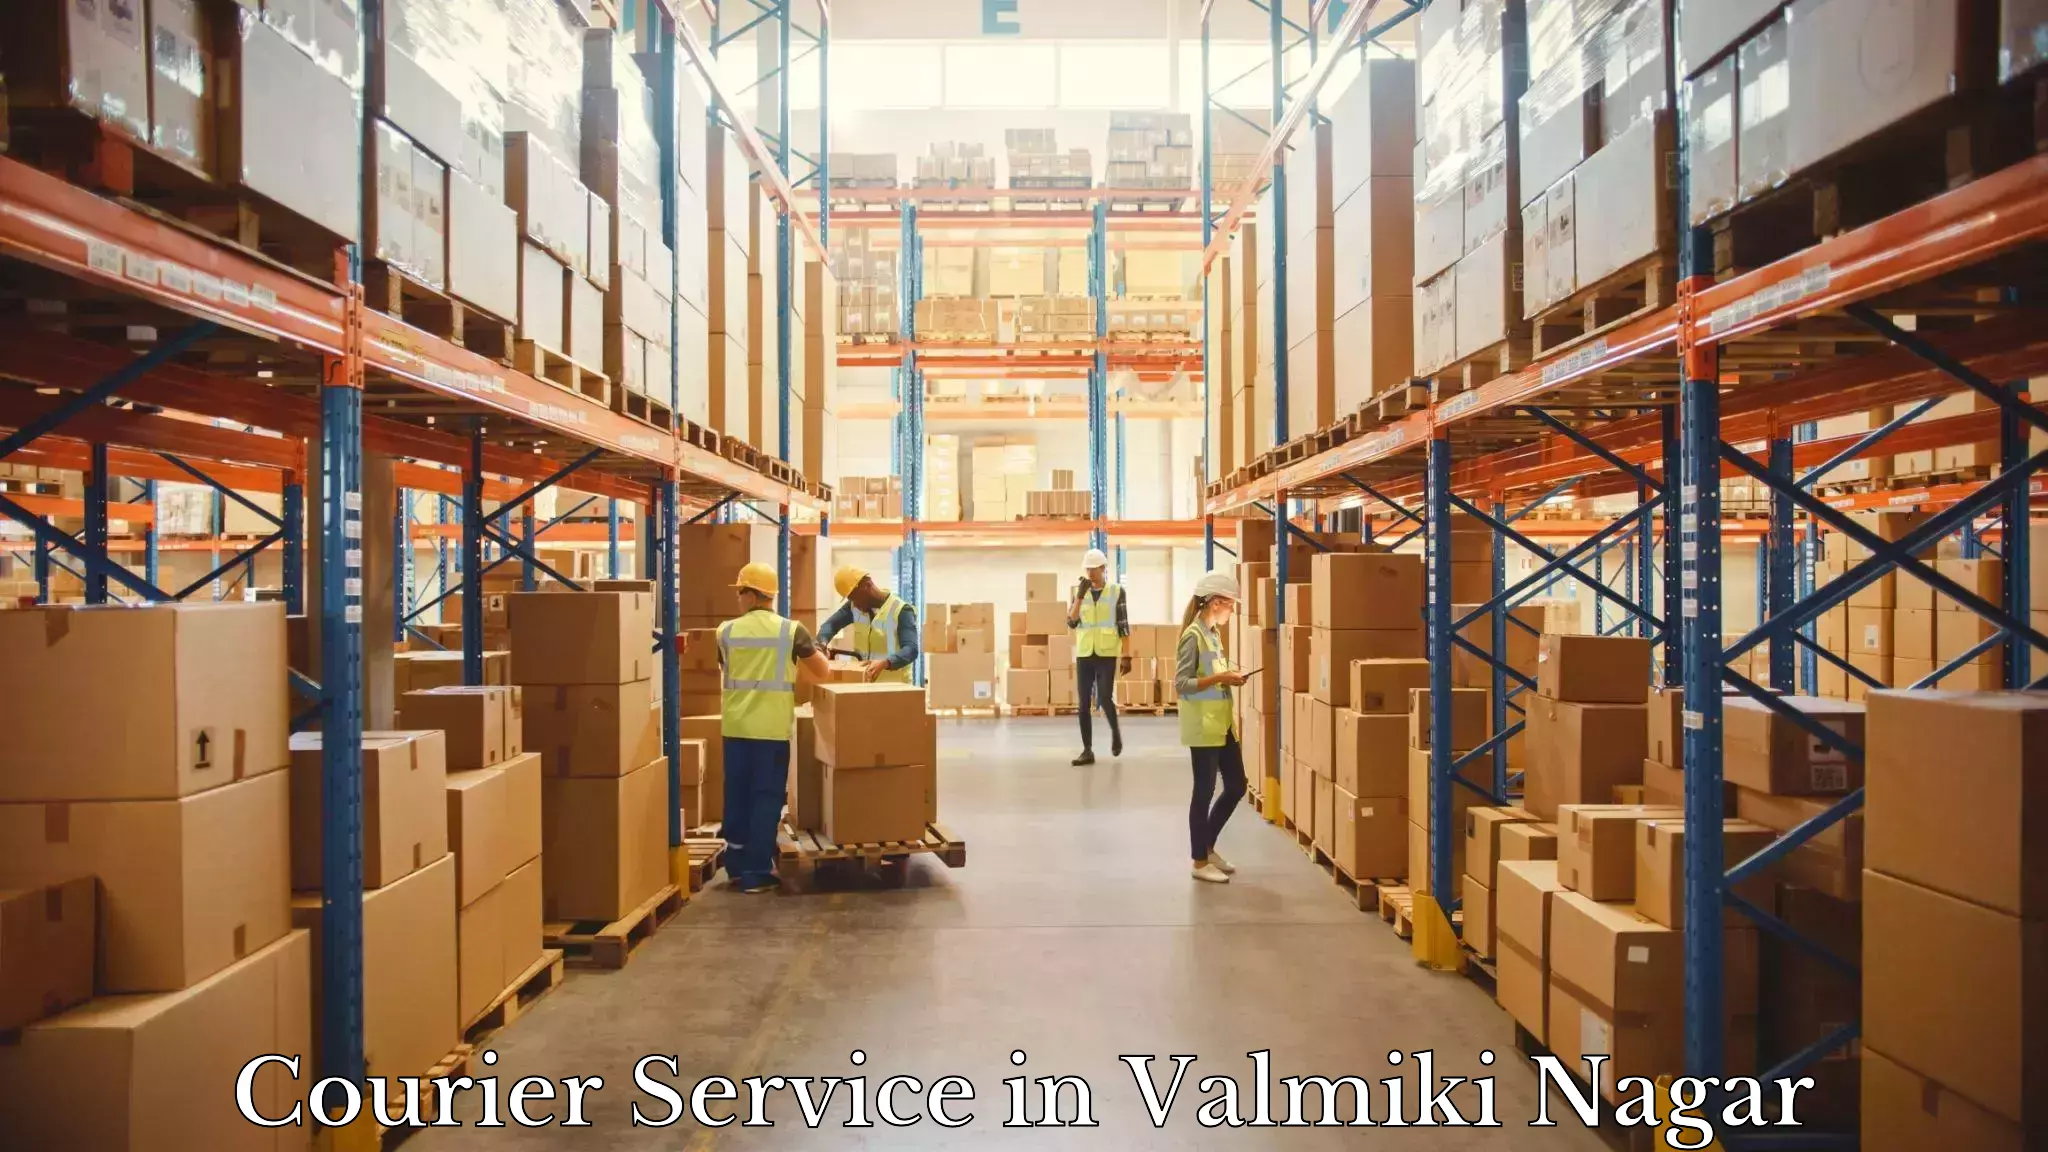 Affordable international shipping in Valmiki Nagar